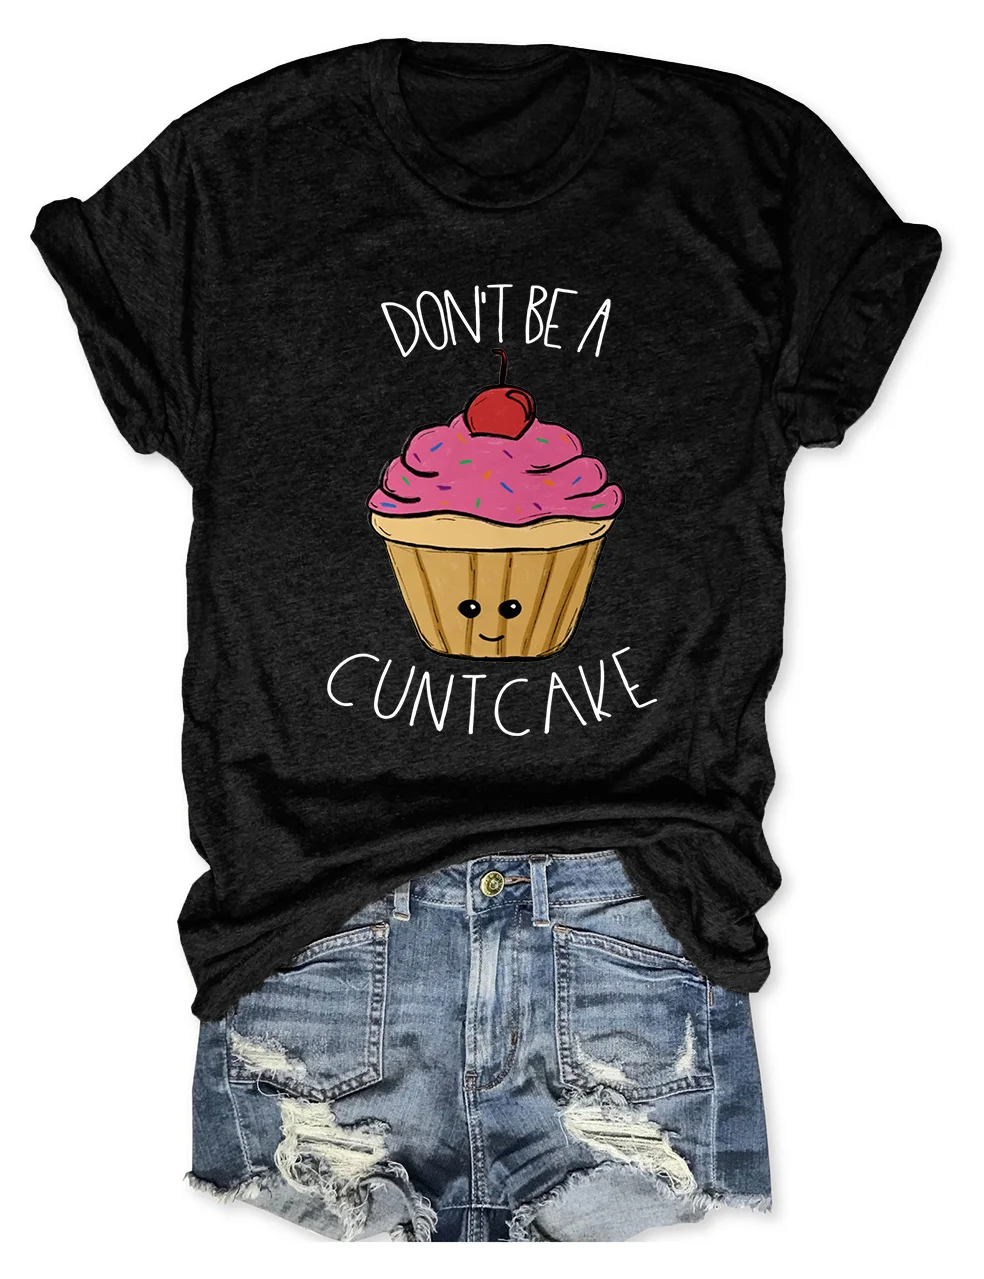 Don't Be A Twatwaffle/Cuntcake Funny T-Shirt